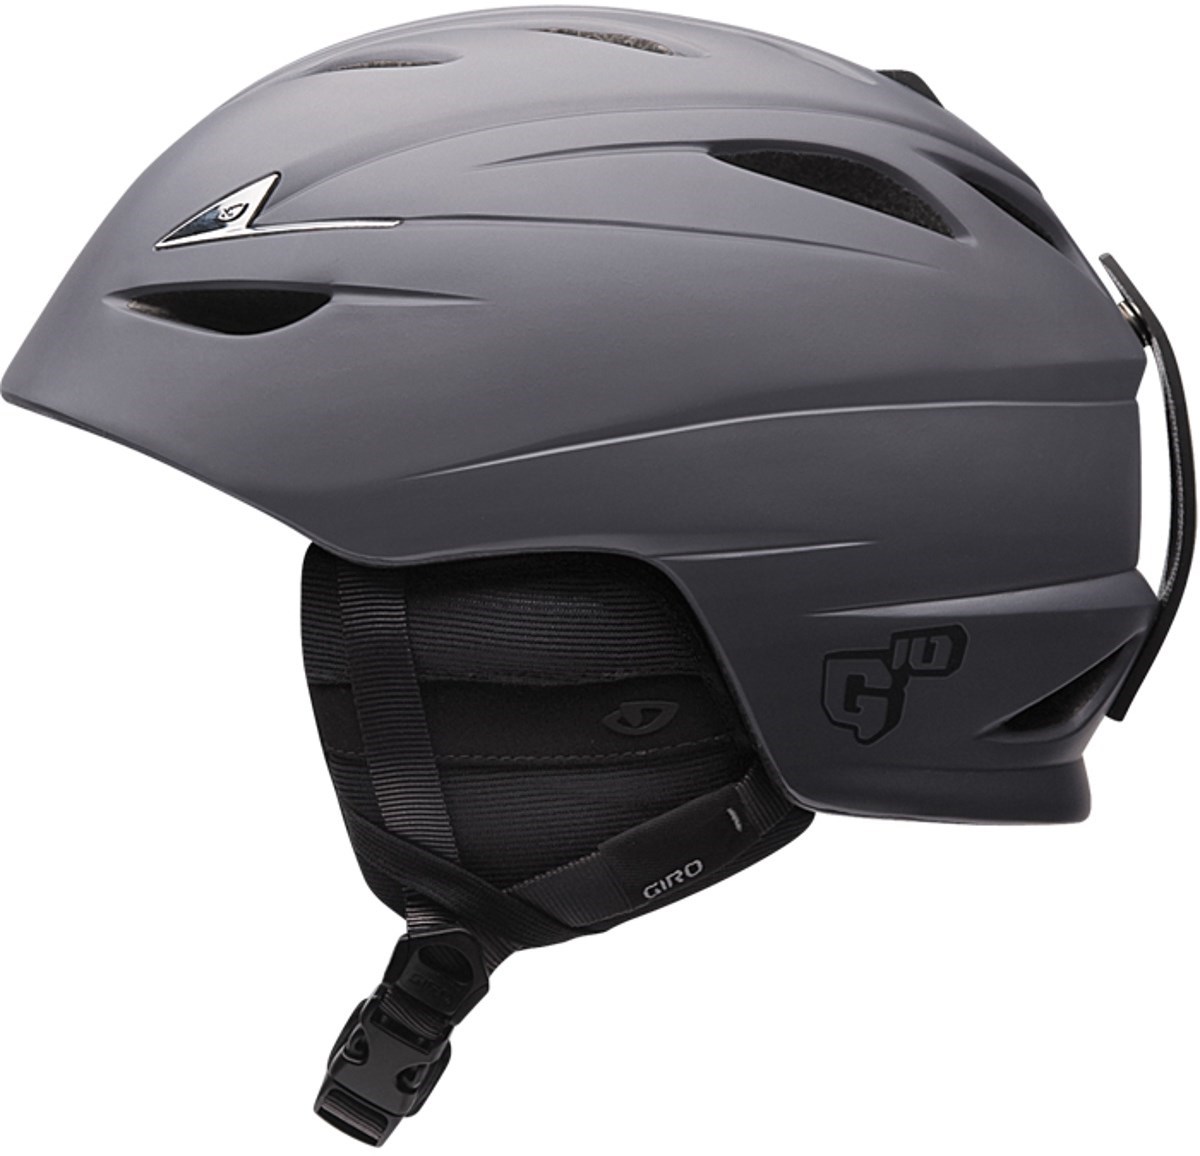 Madison Ski G10 Snowboard Helmet product image